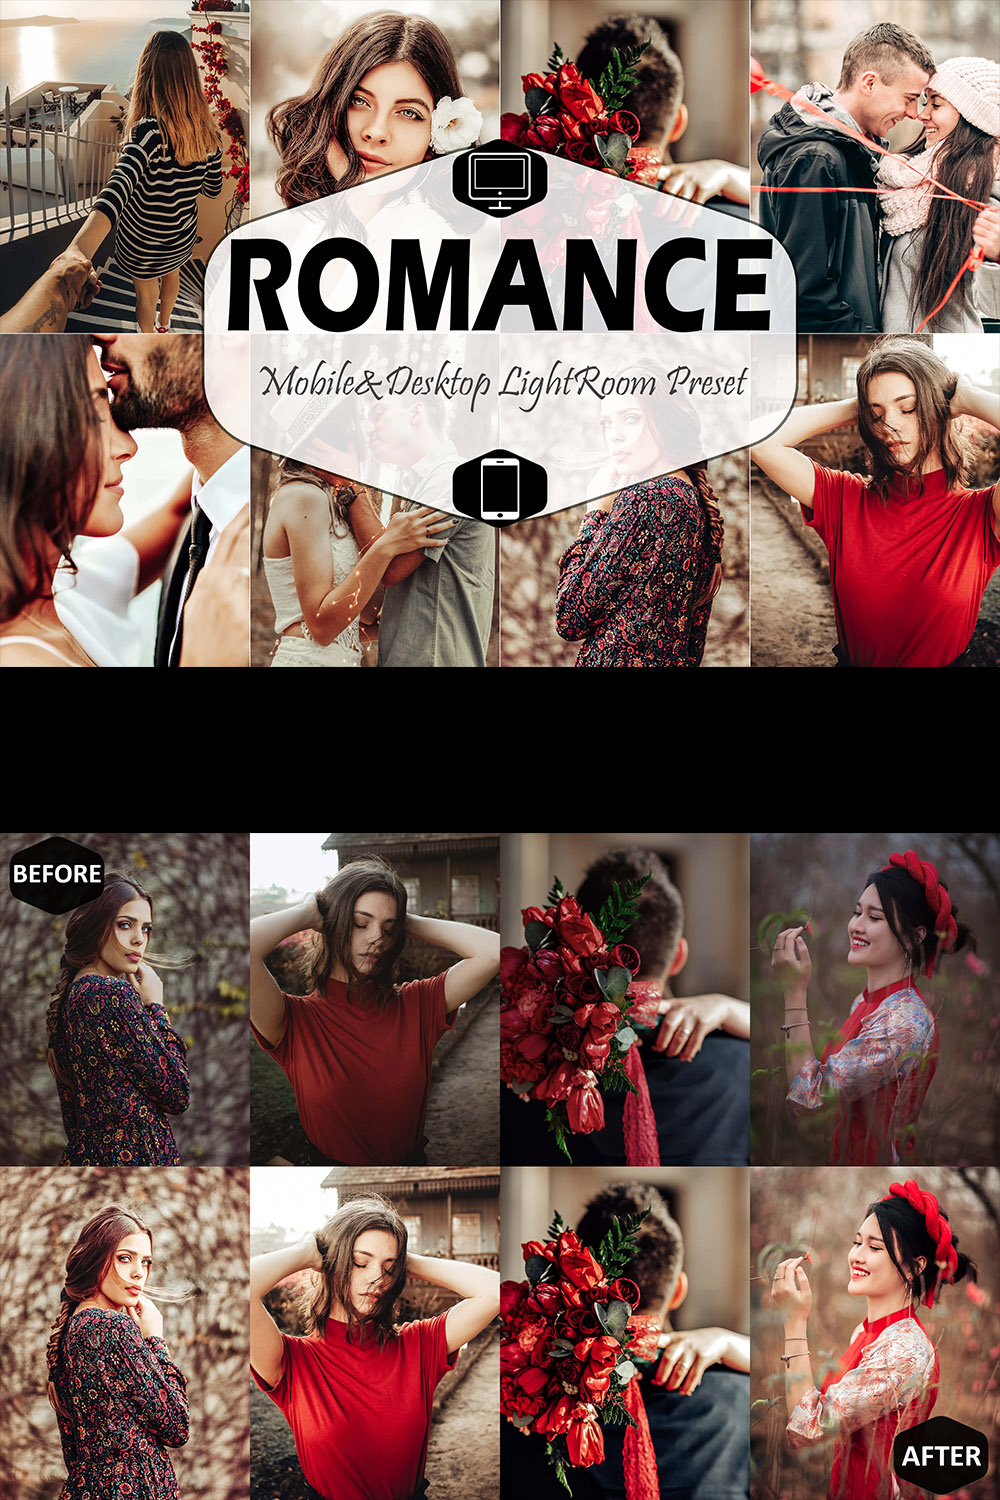 10 Romance Mobile & Desktop Lightroom Presets, lover valentines day LR preset, Portrait Trendy Filter, DNG Lifestyle Instagram Theme pinterest preview image.